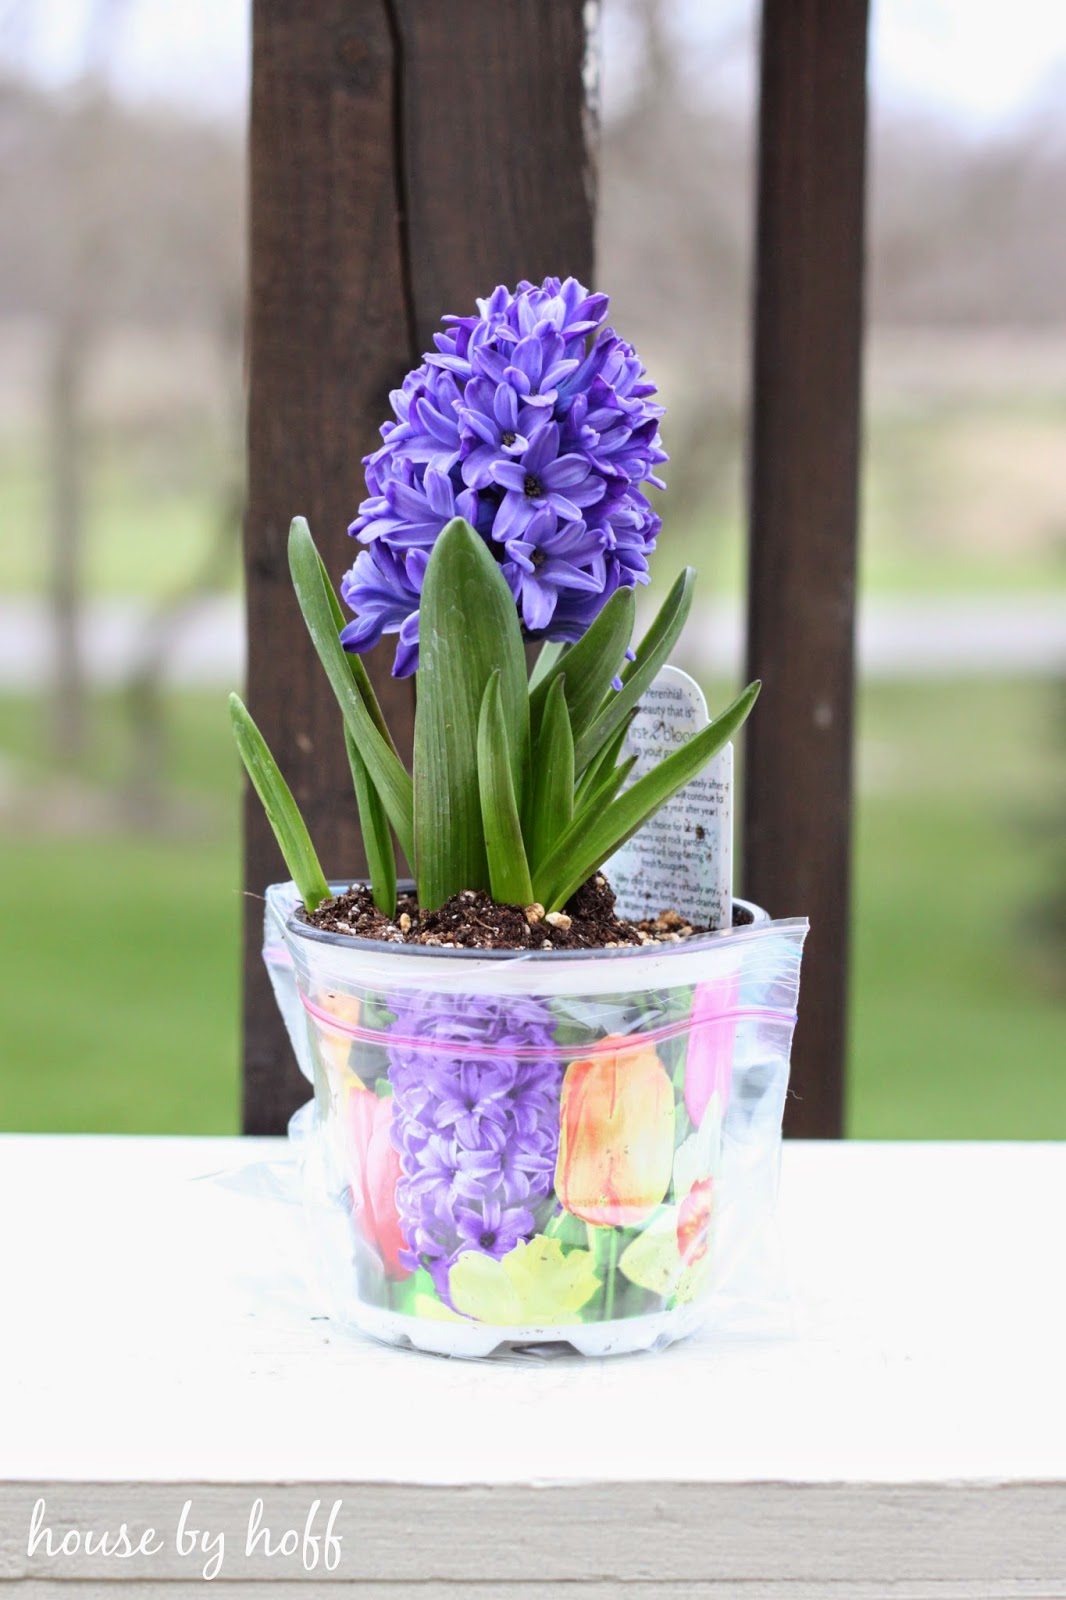 flower mother's day gift idea via housebyhoff.com